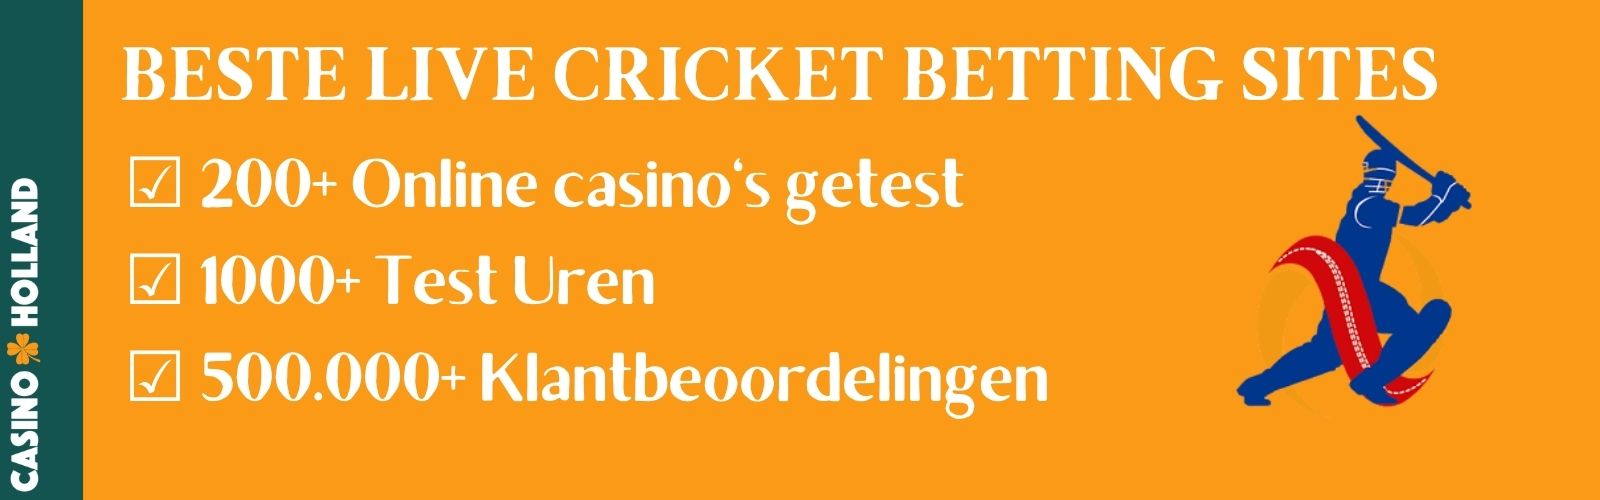 Cricket betting 